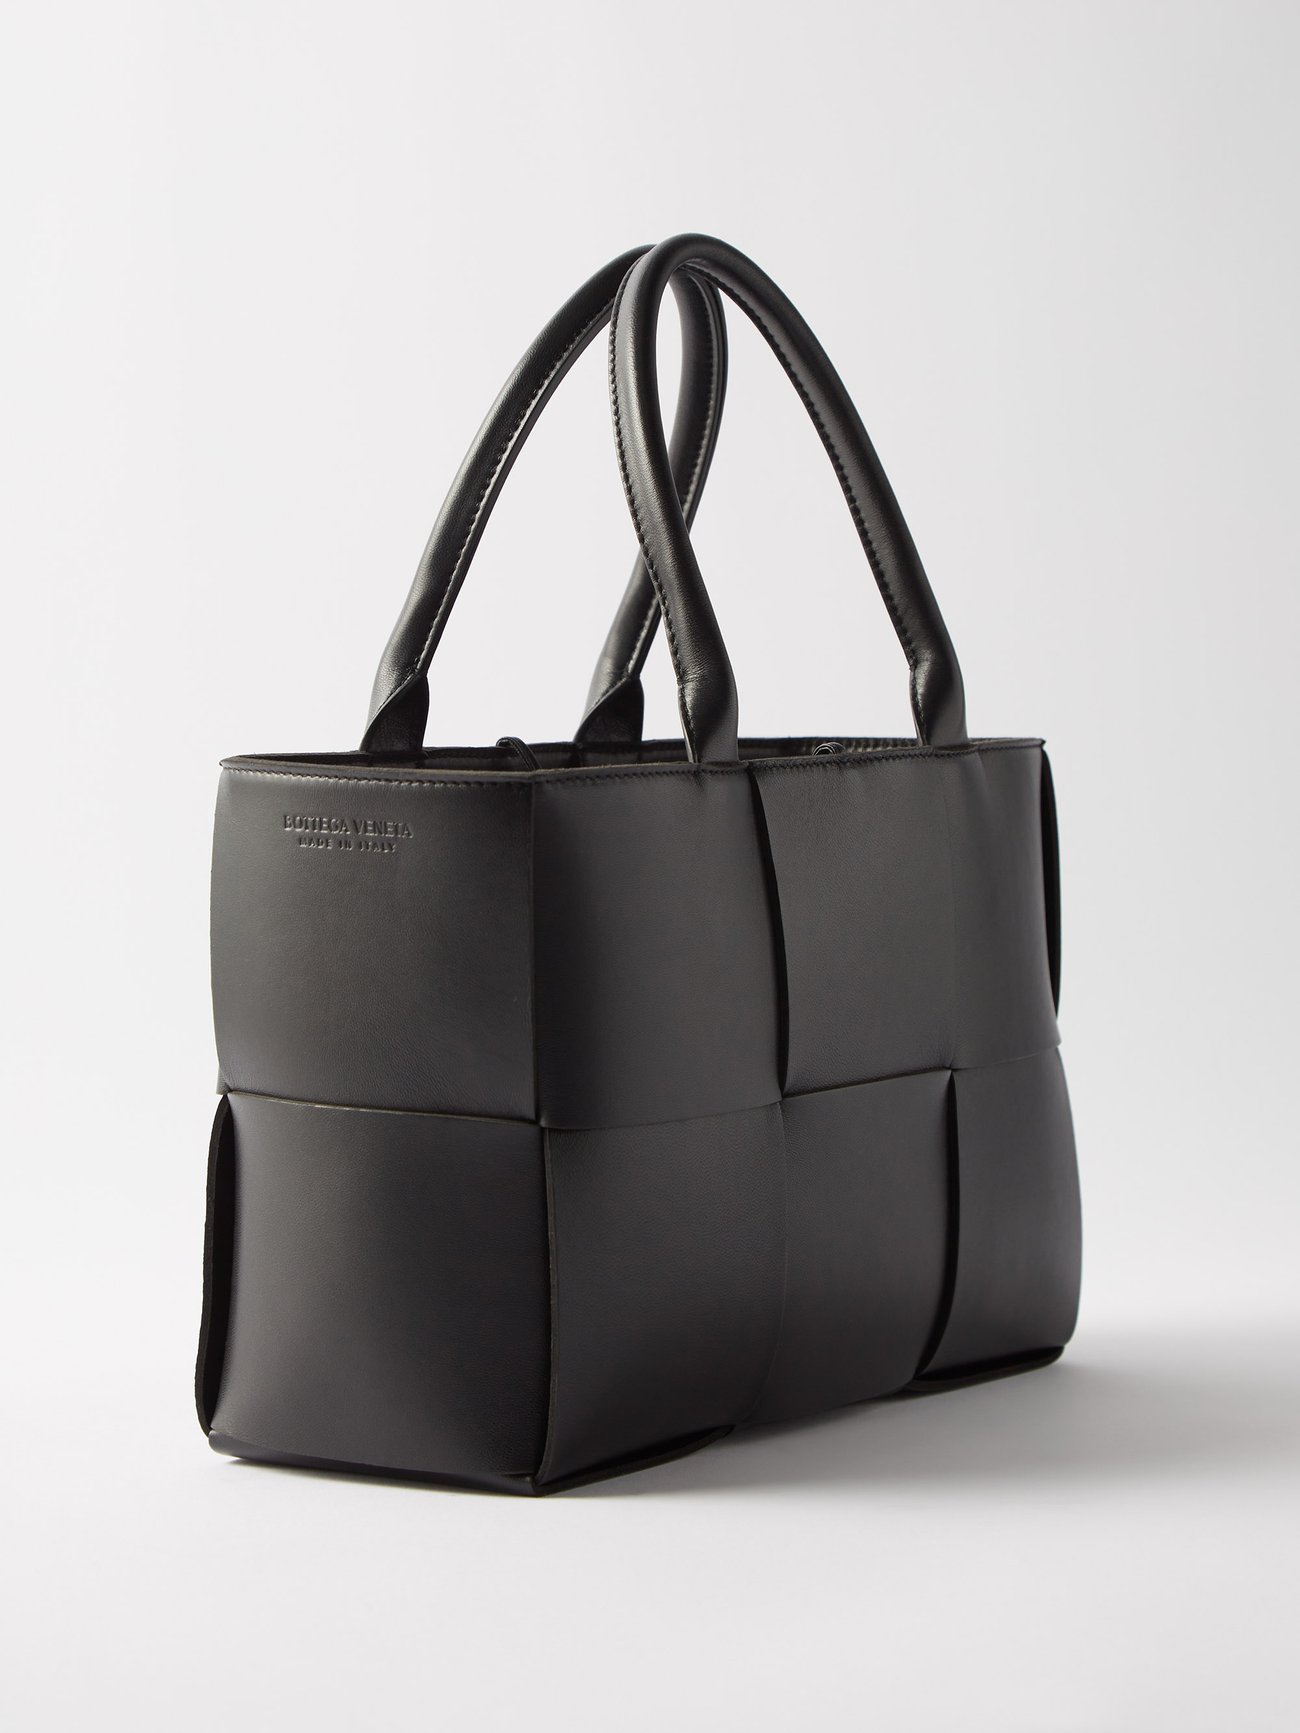 Bottega Veneta® Women's Intrecciato Tote Bag in Almond. Shop online now.